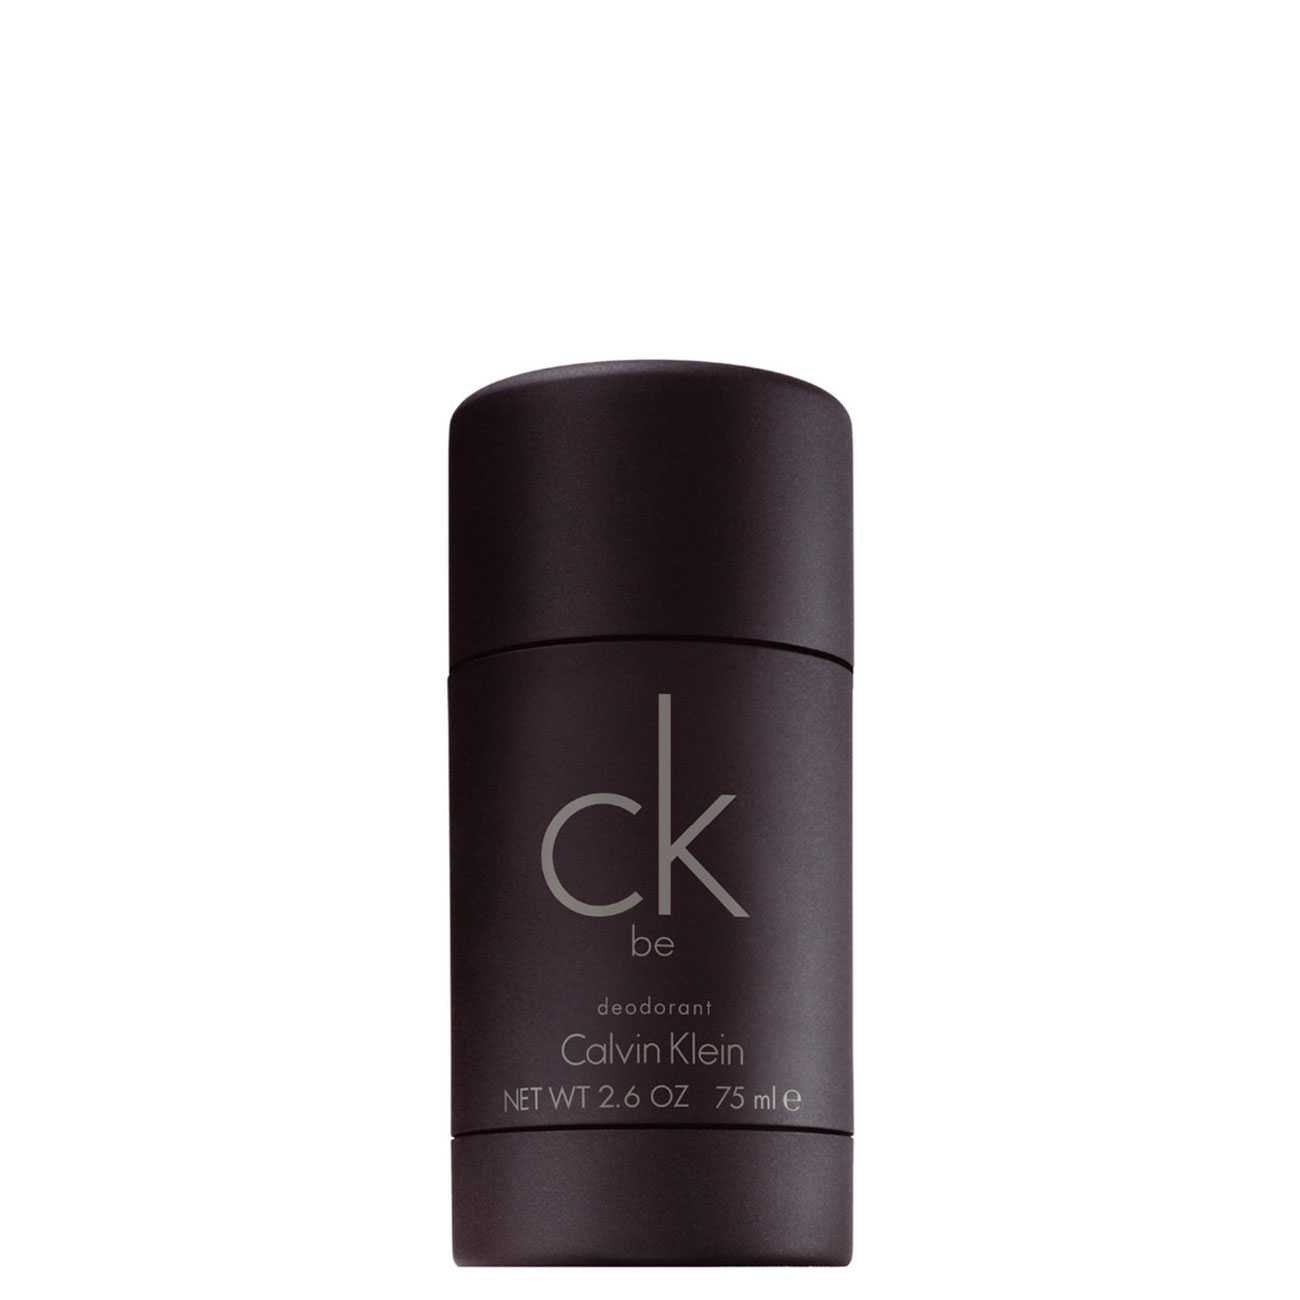 CK BE DEODORANT STICK Calvin Klein bestvalue.eu